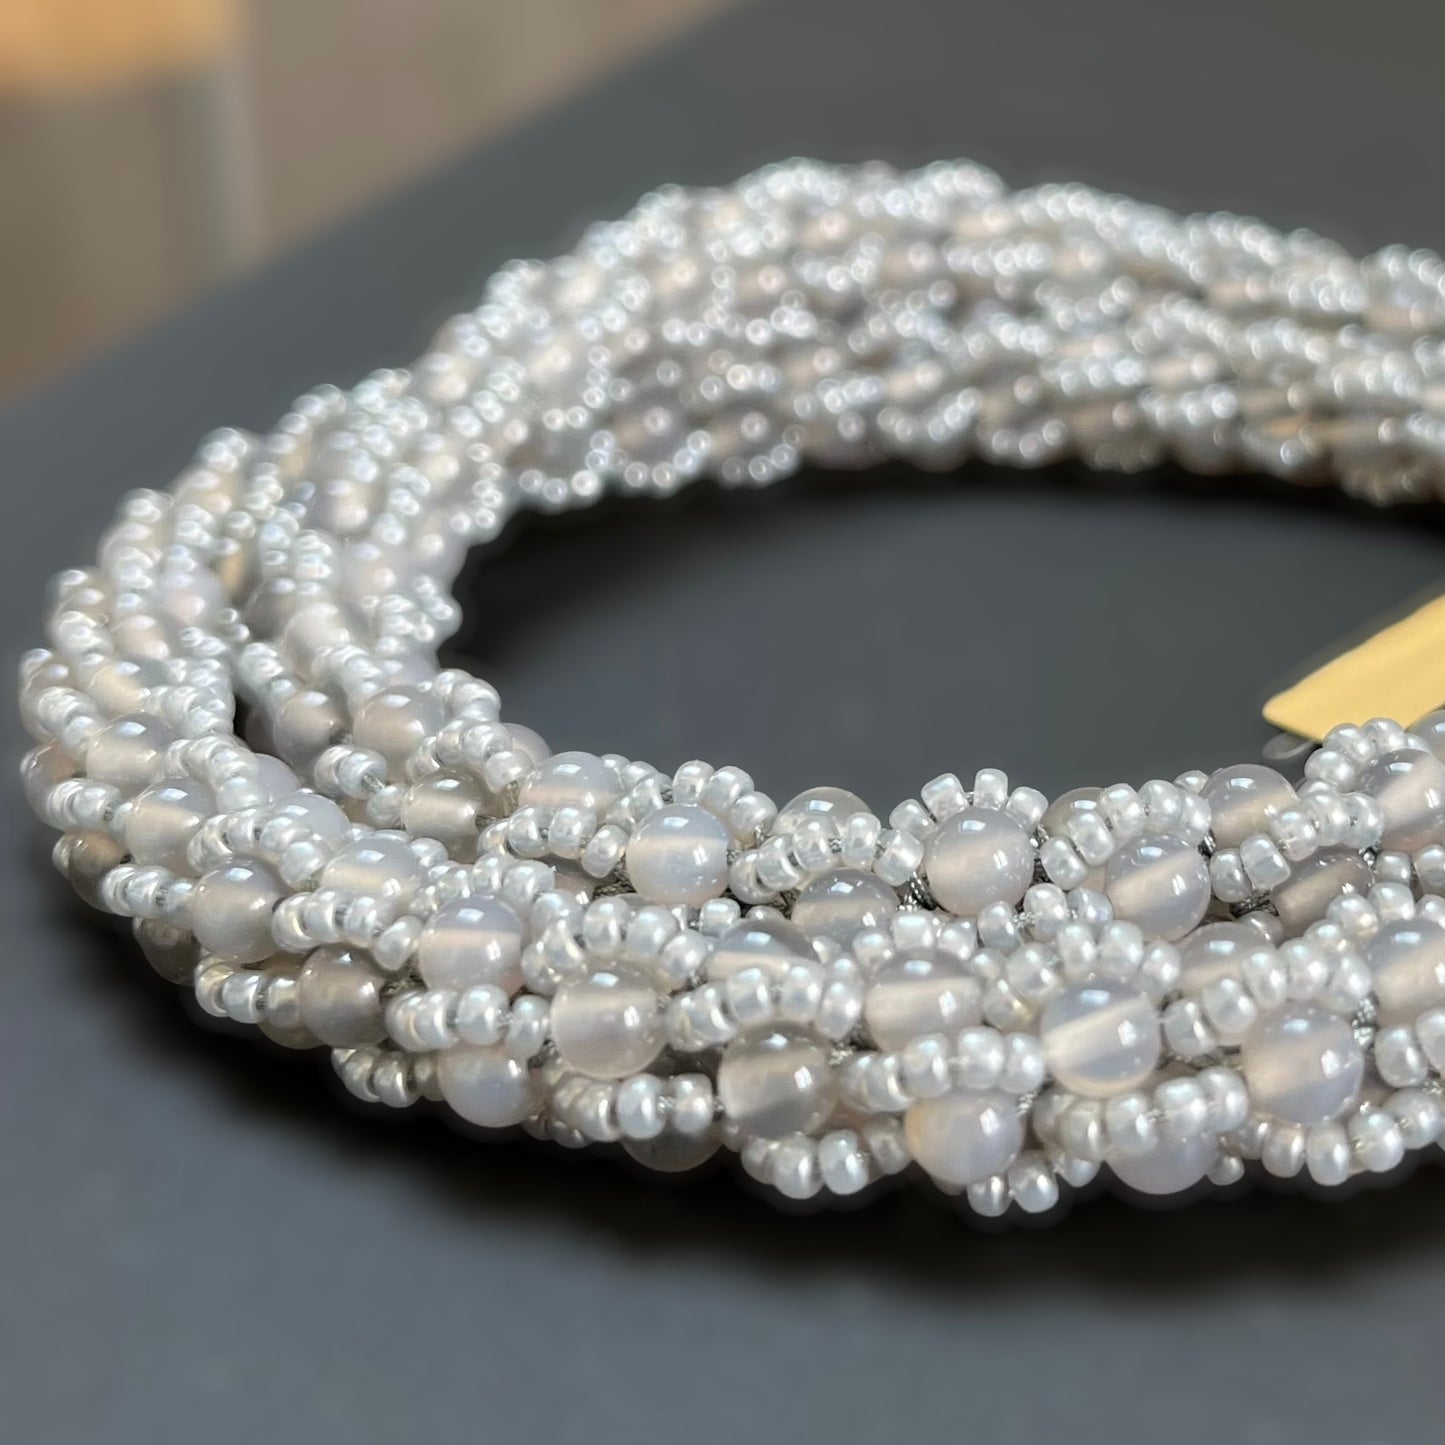 Collier spirale au crochet en perles Miyuki et agate, 51 cm